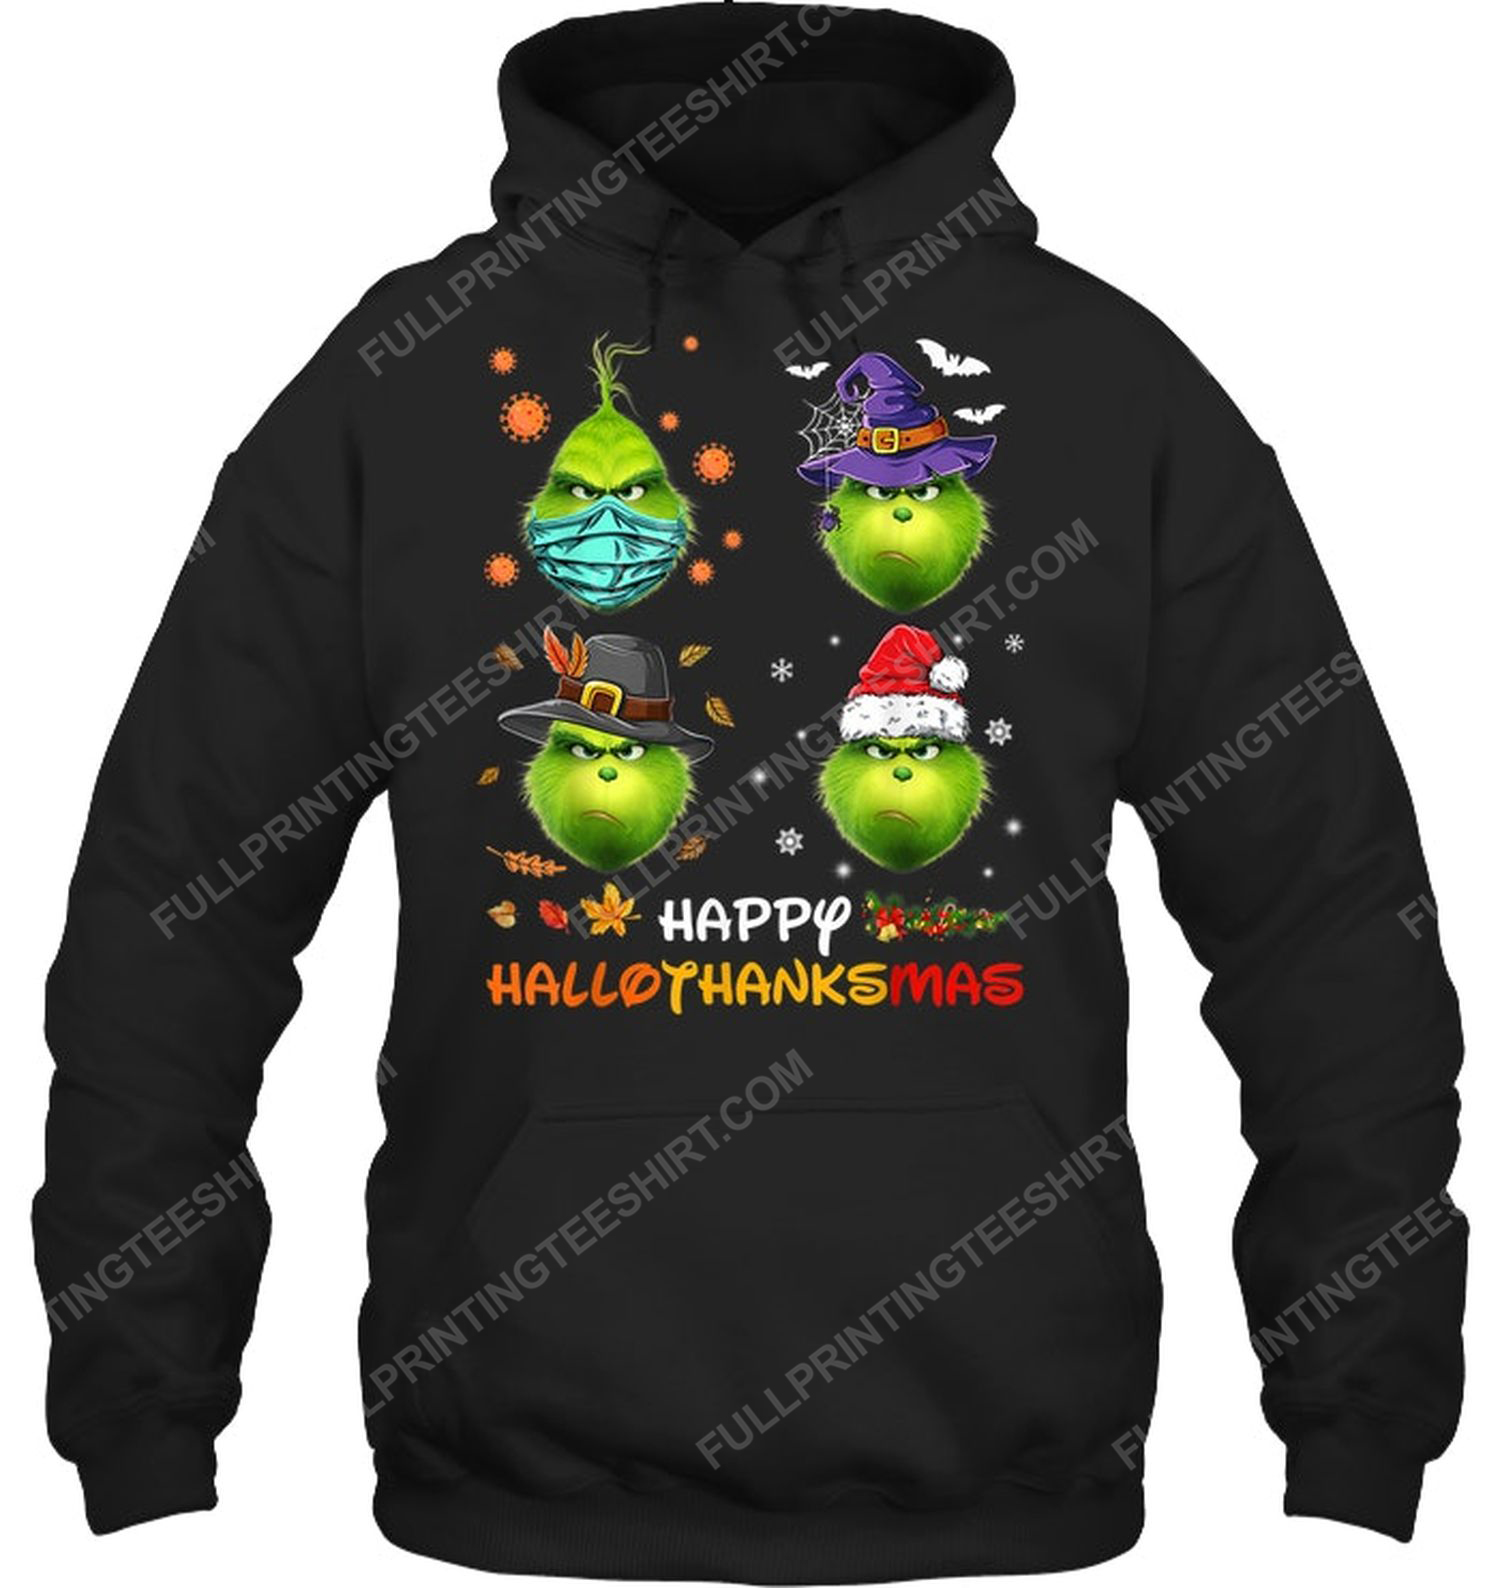 The grinch happy hallothanksmas and merry christmas fall hoodie